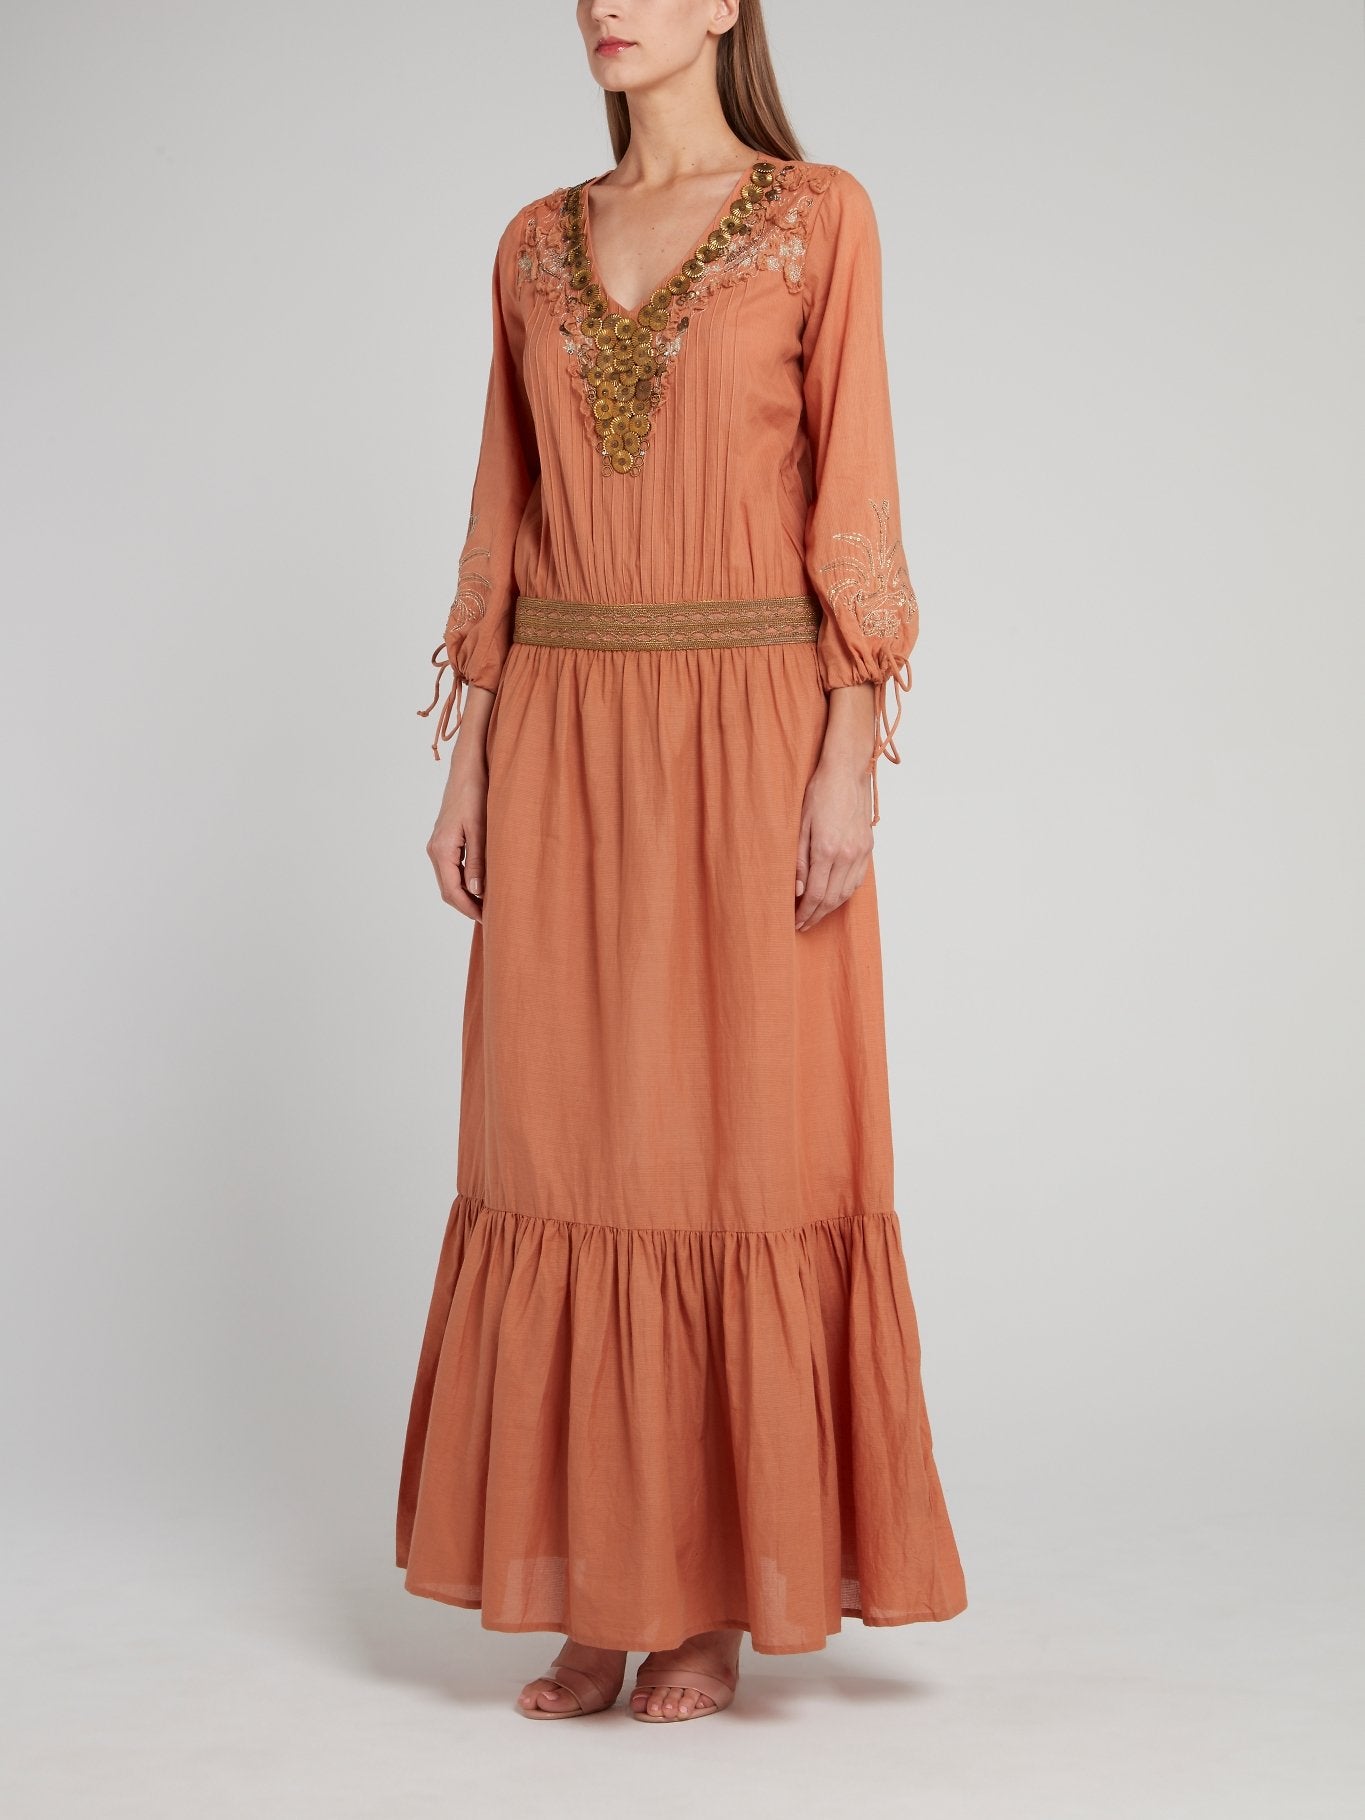 Embellished Drop Waist Prairie Dress